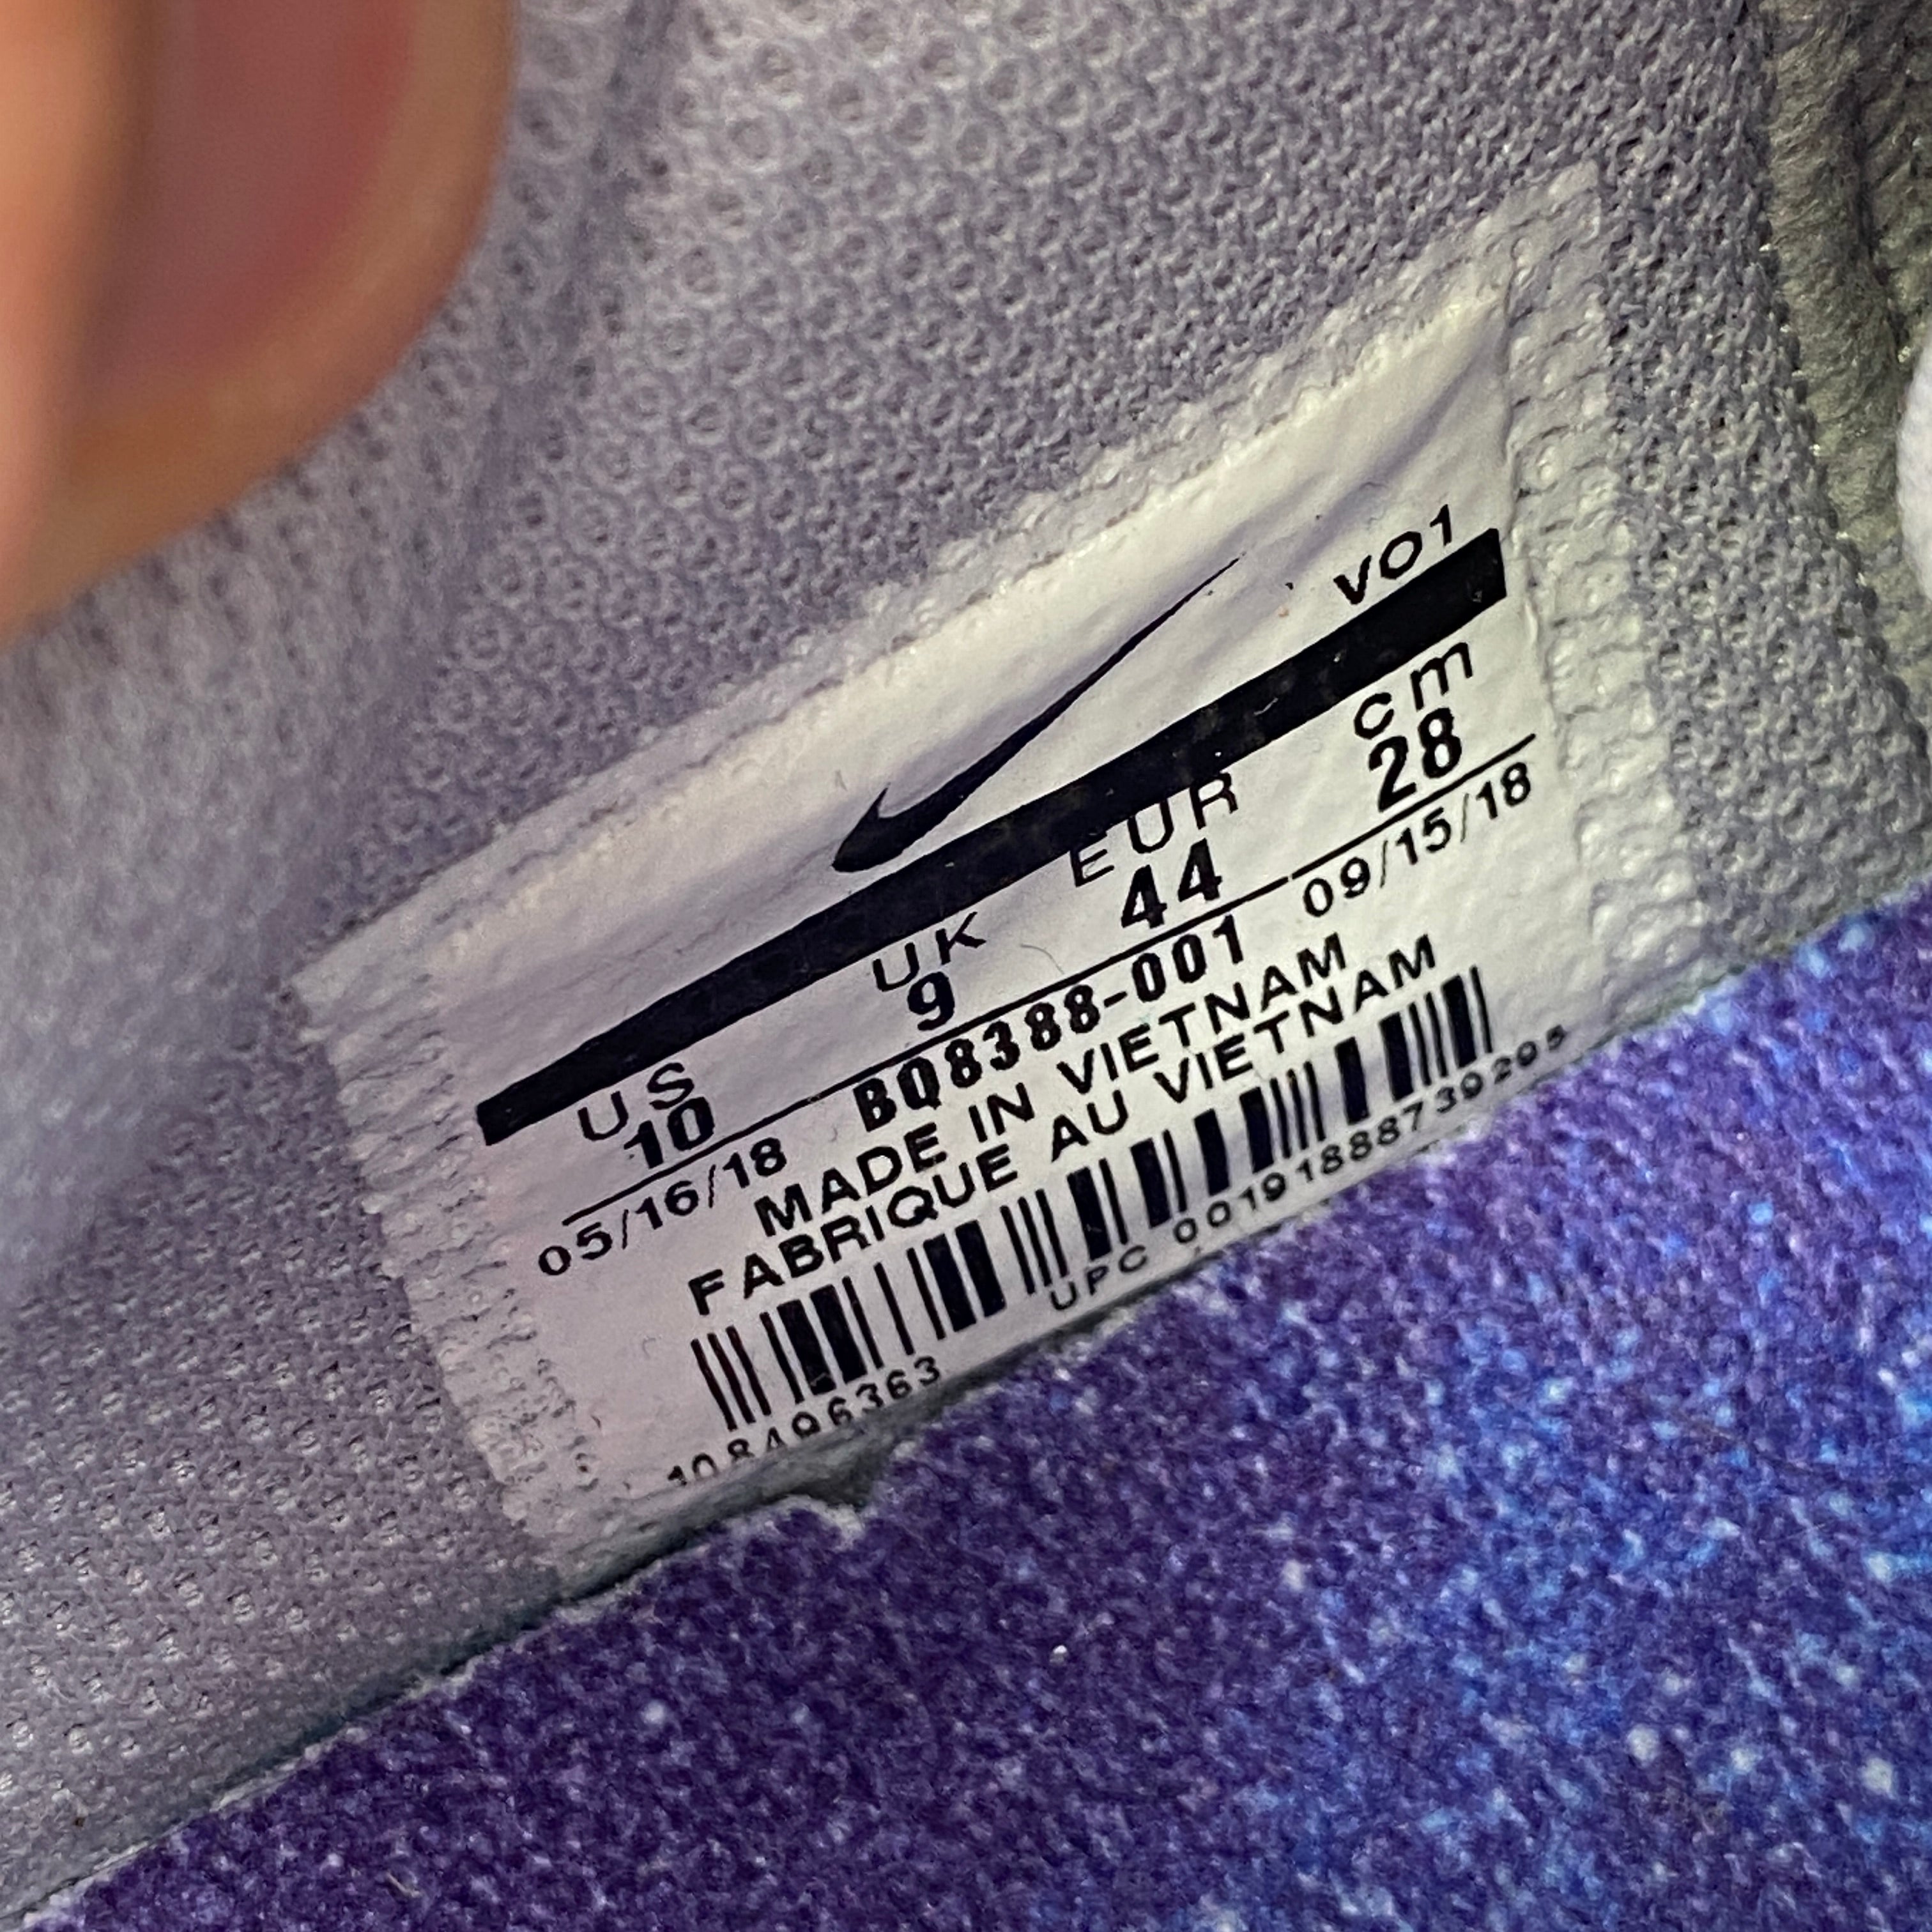 Nike PG 2.5 "PLAYSTATION WOLF GREY" 2018 Used Original Box Size 10